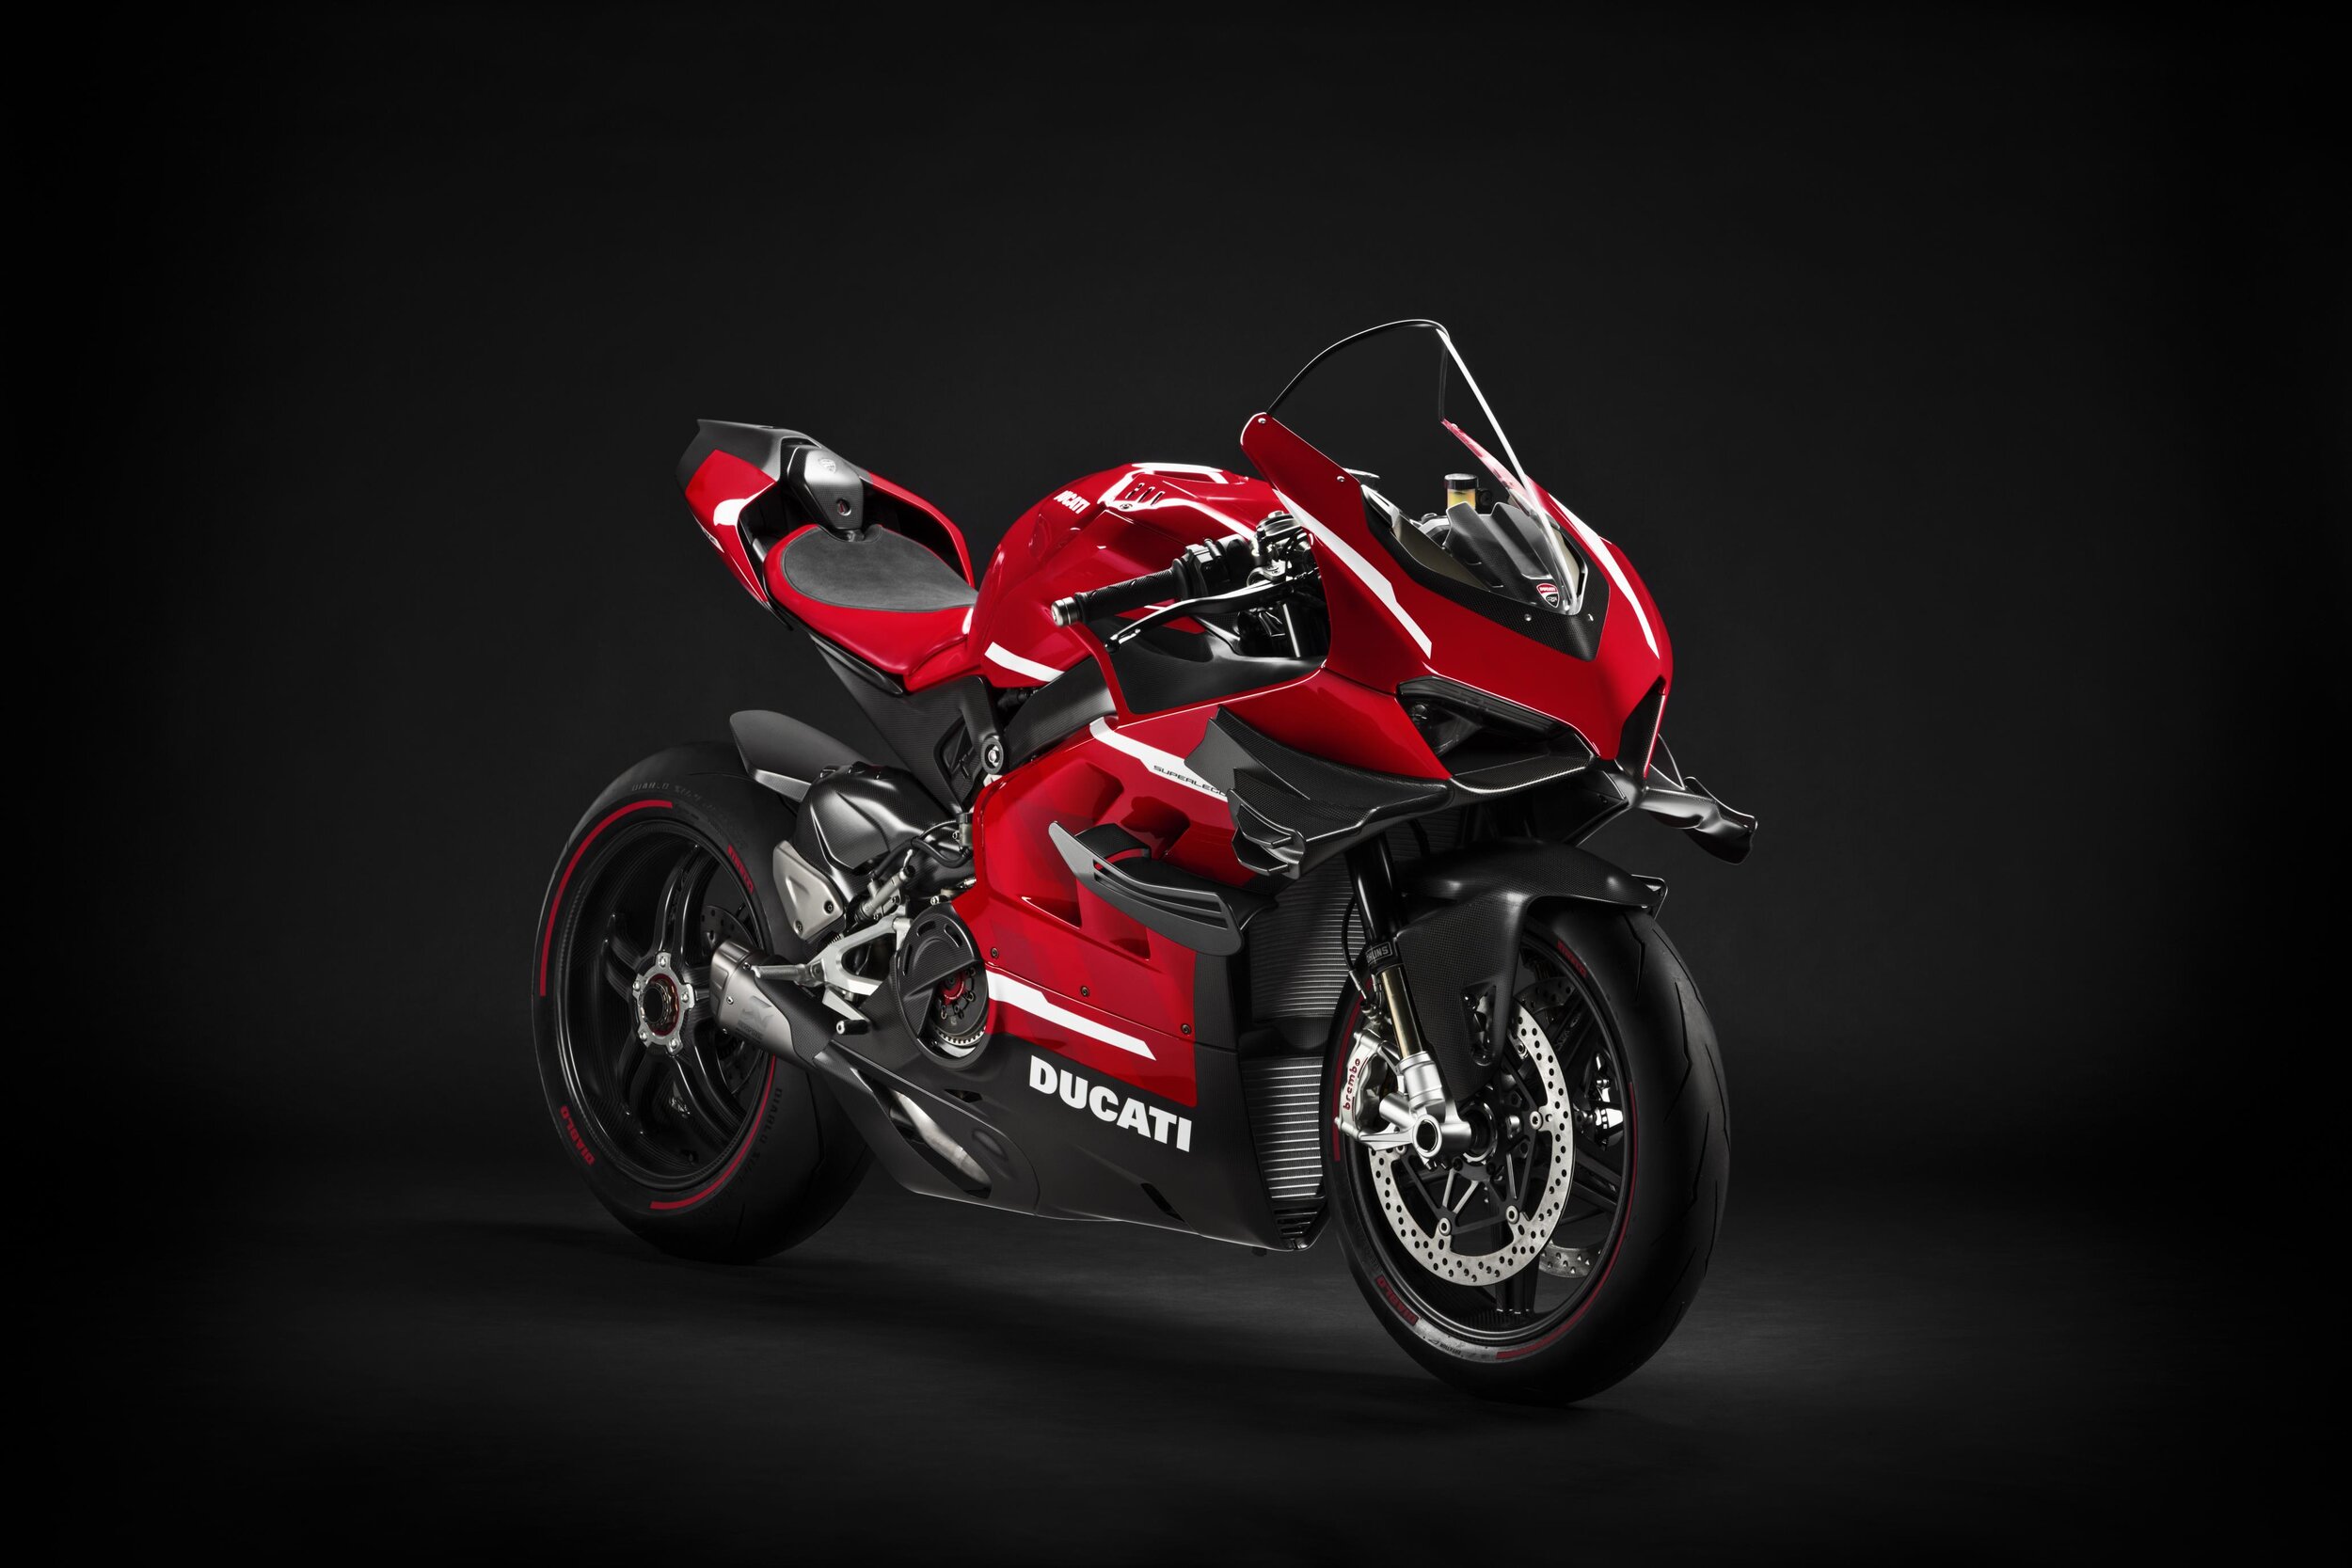 01_Ducati Superleggera V4_UC145951_High.jpg